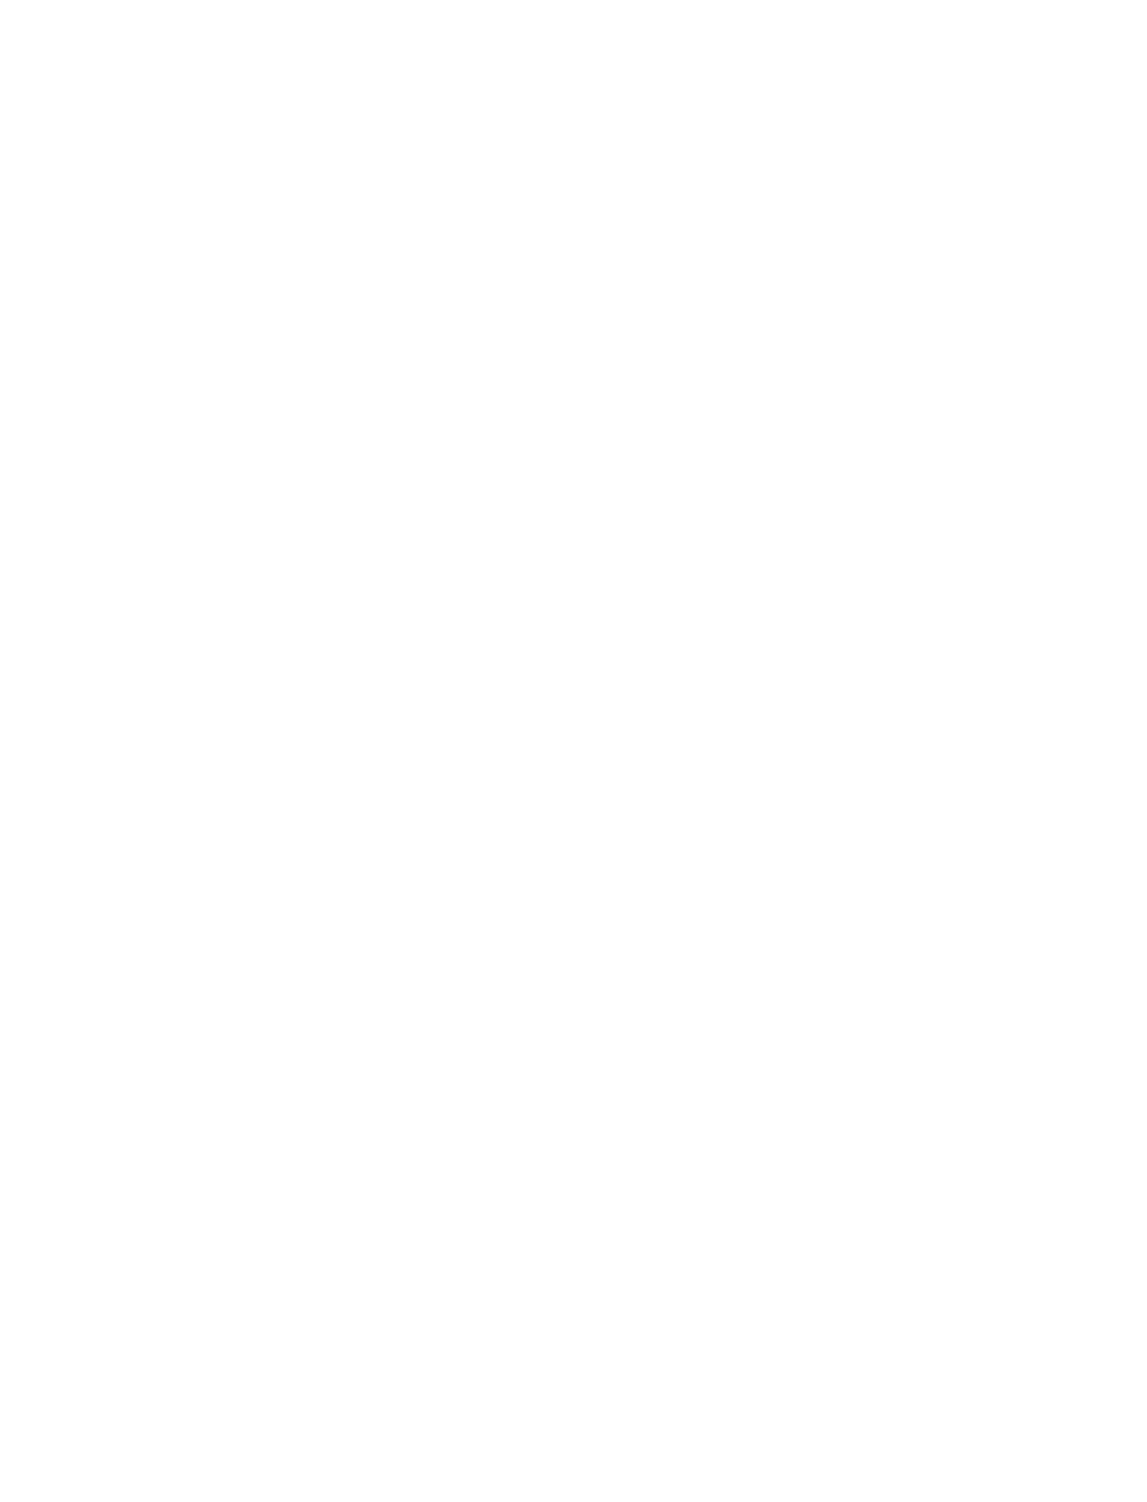 Experian logo pour fonds sombres (PNG transparent)